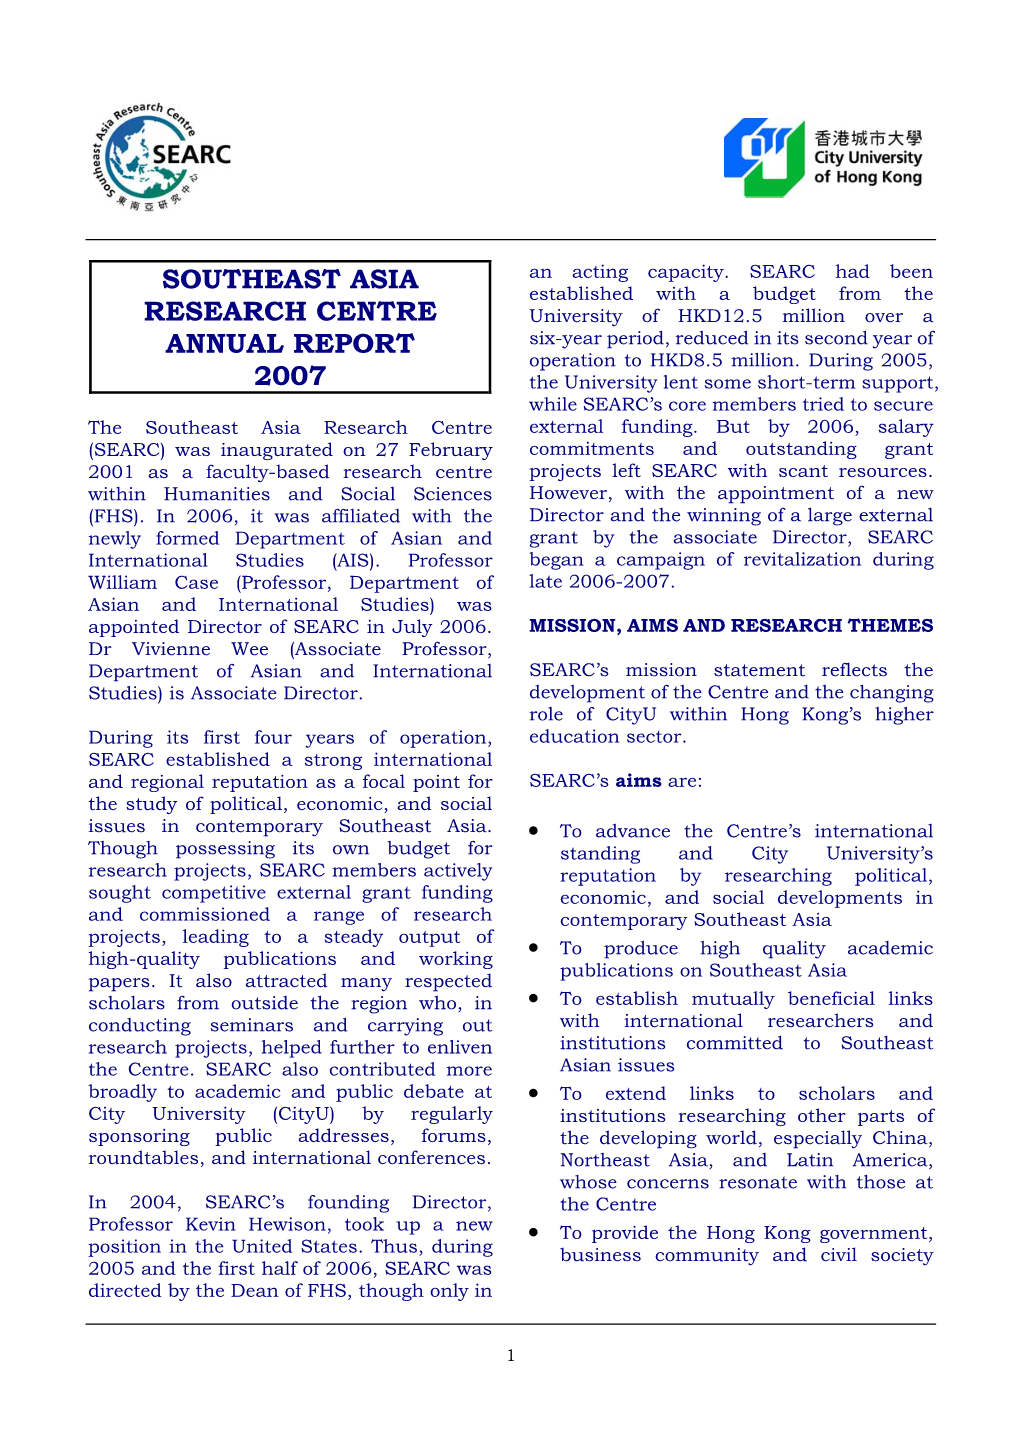 Southeast Asia Research Centre Annual Report 2007